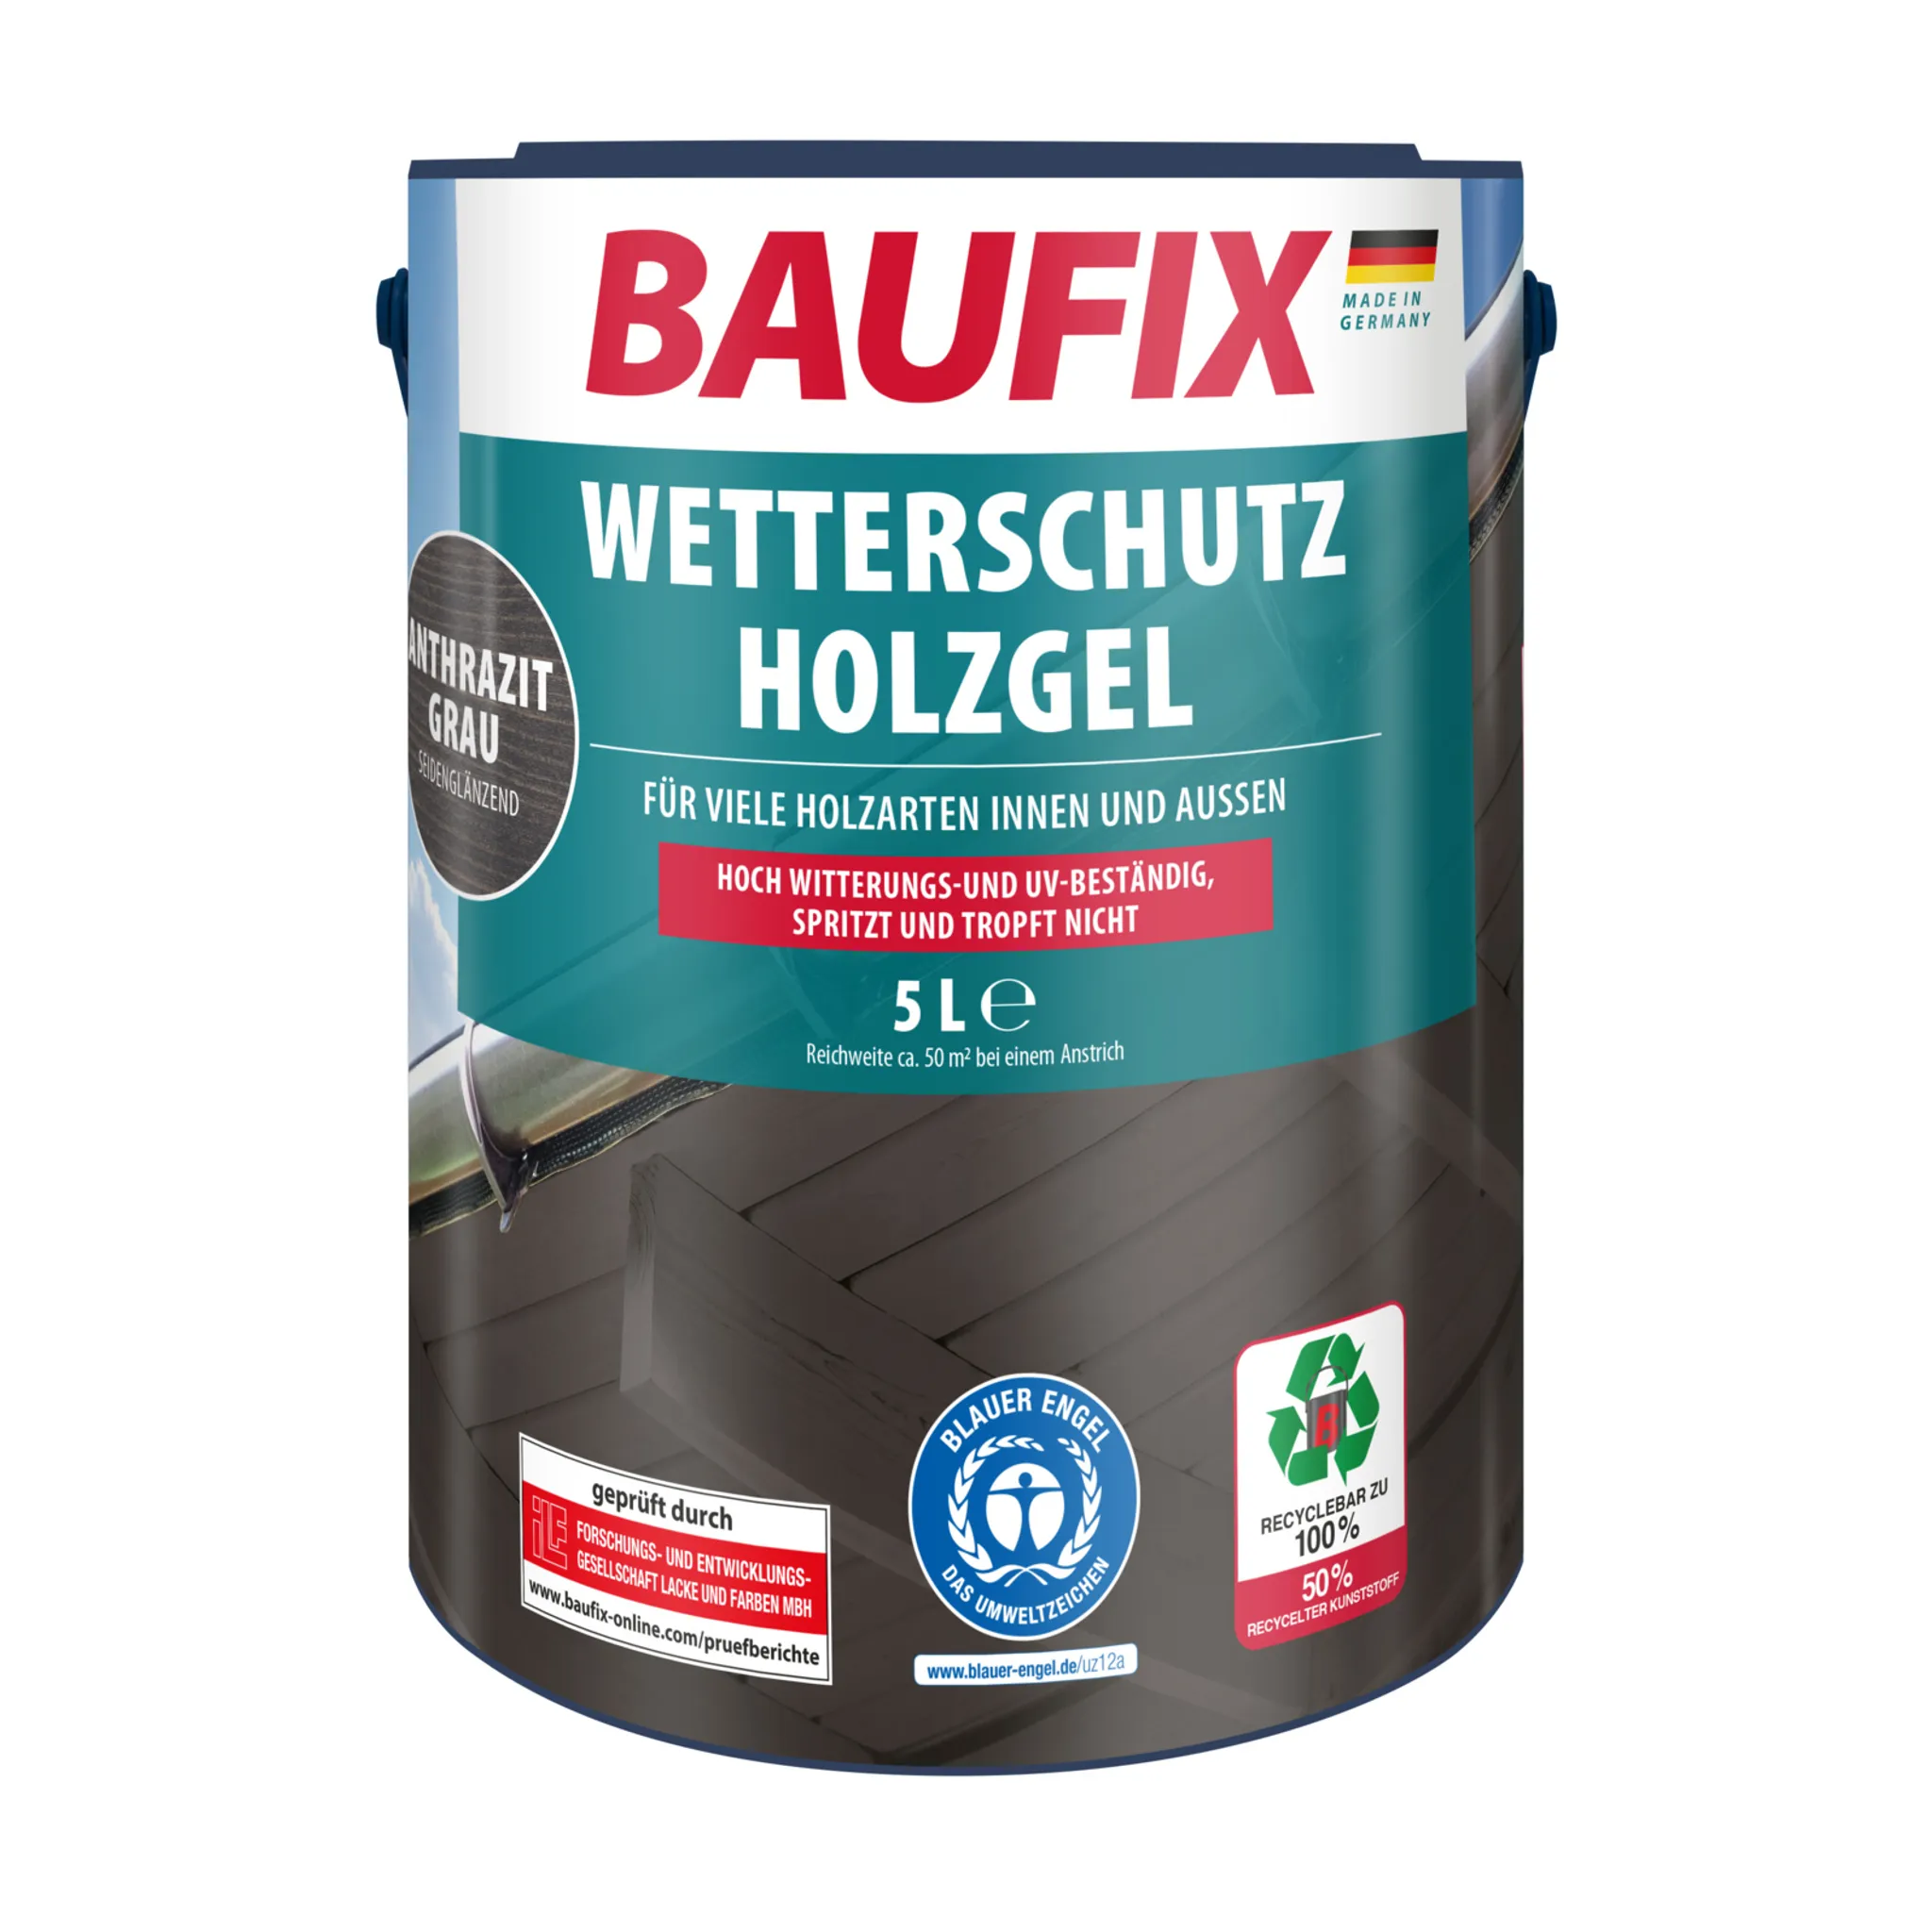 Wetterschutz-Holzgel anthrazitgrau BAUFIX